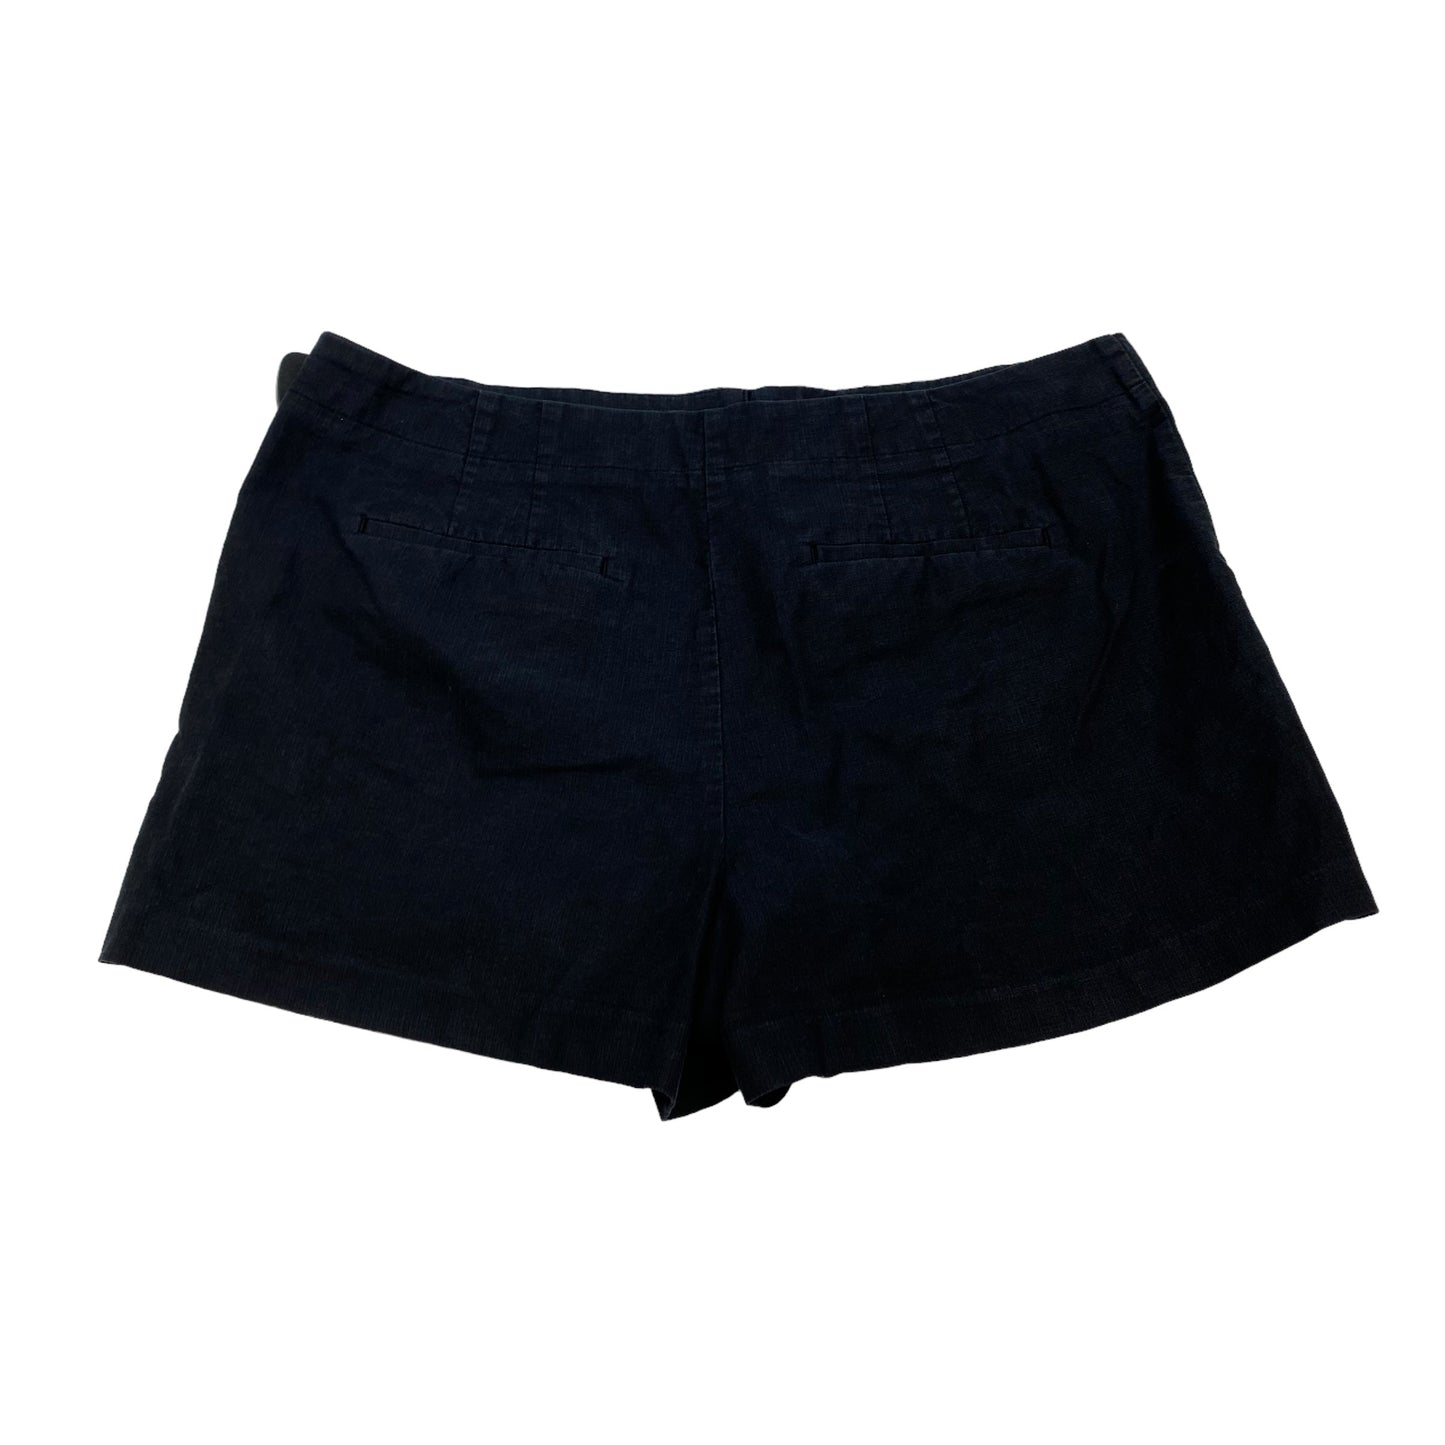 Black Shorts Loft, Size 18